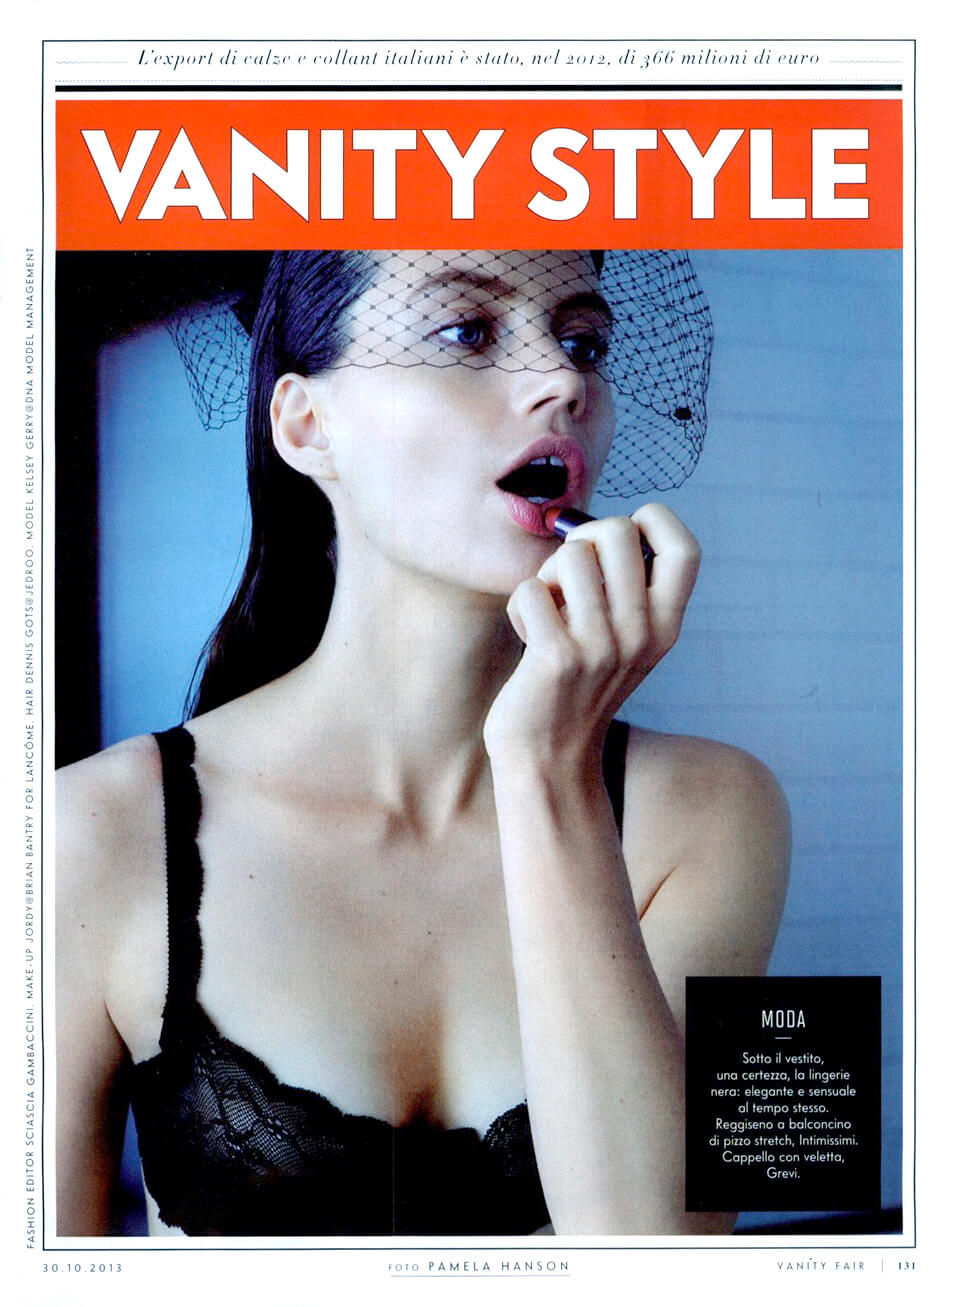 Veletta Grevi - Fascinator - Vanity Fair